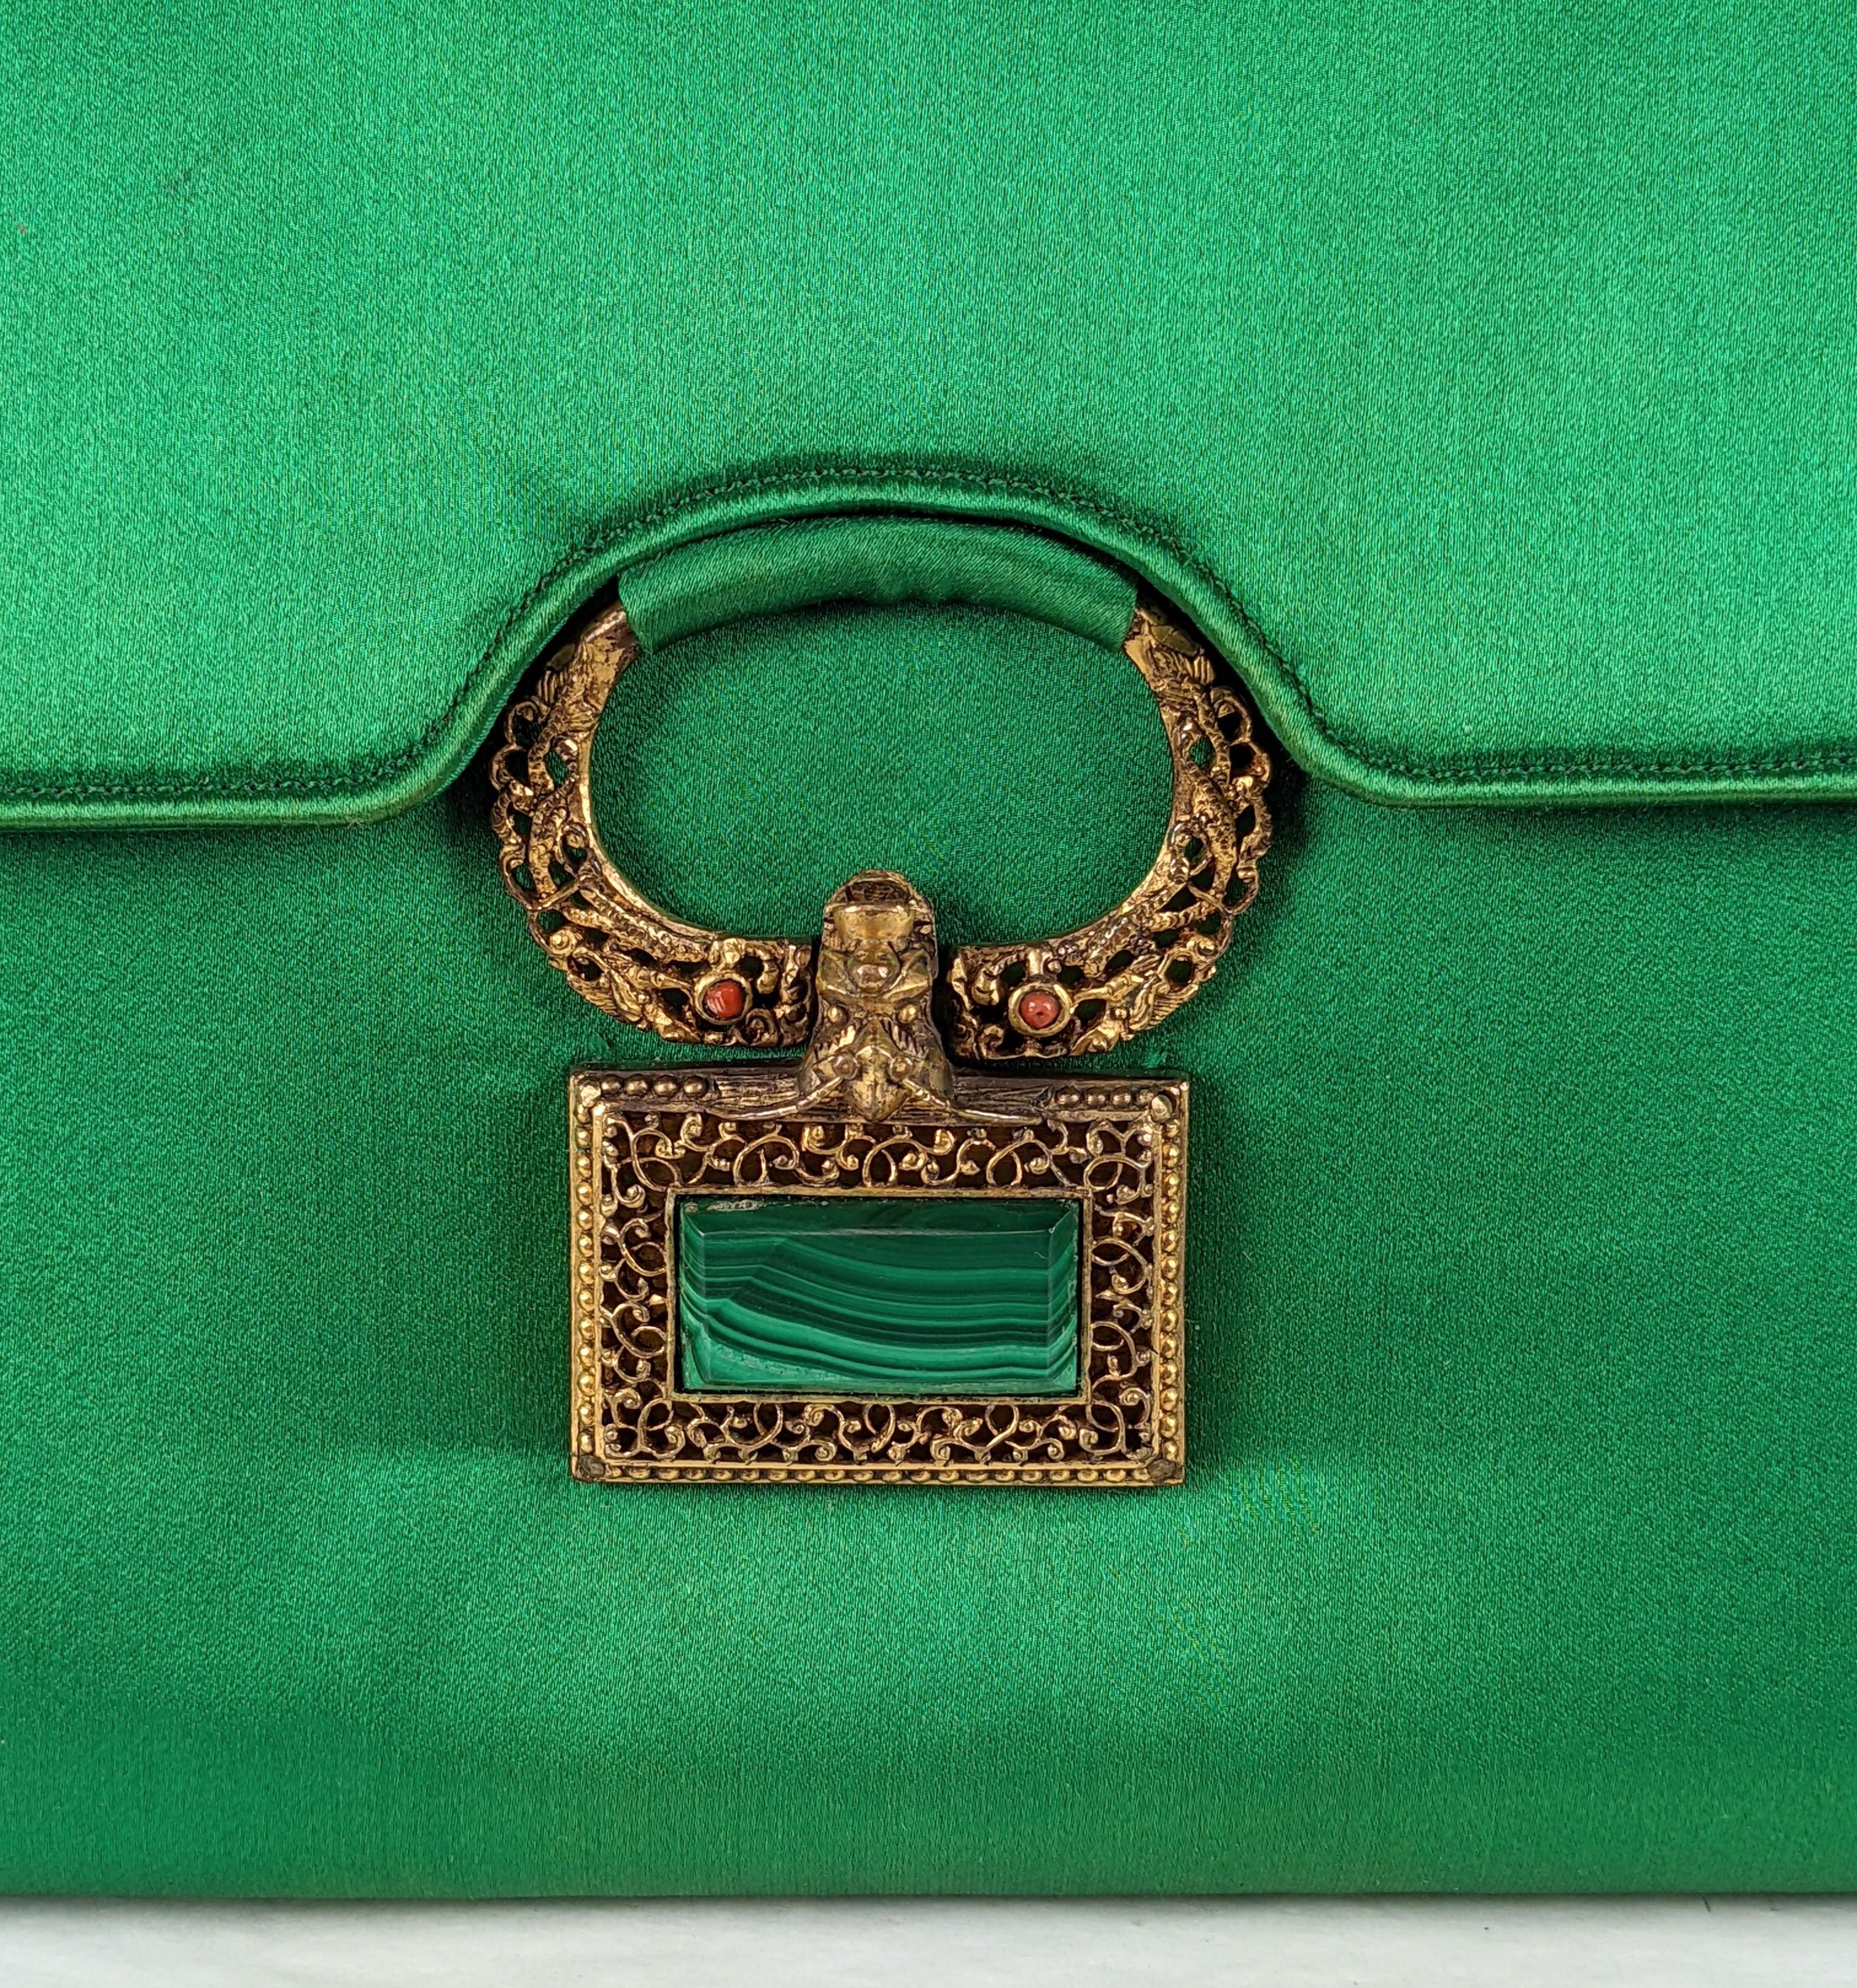 emerald green satin clutch bag